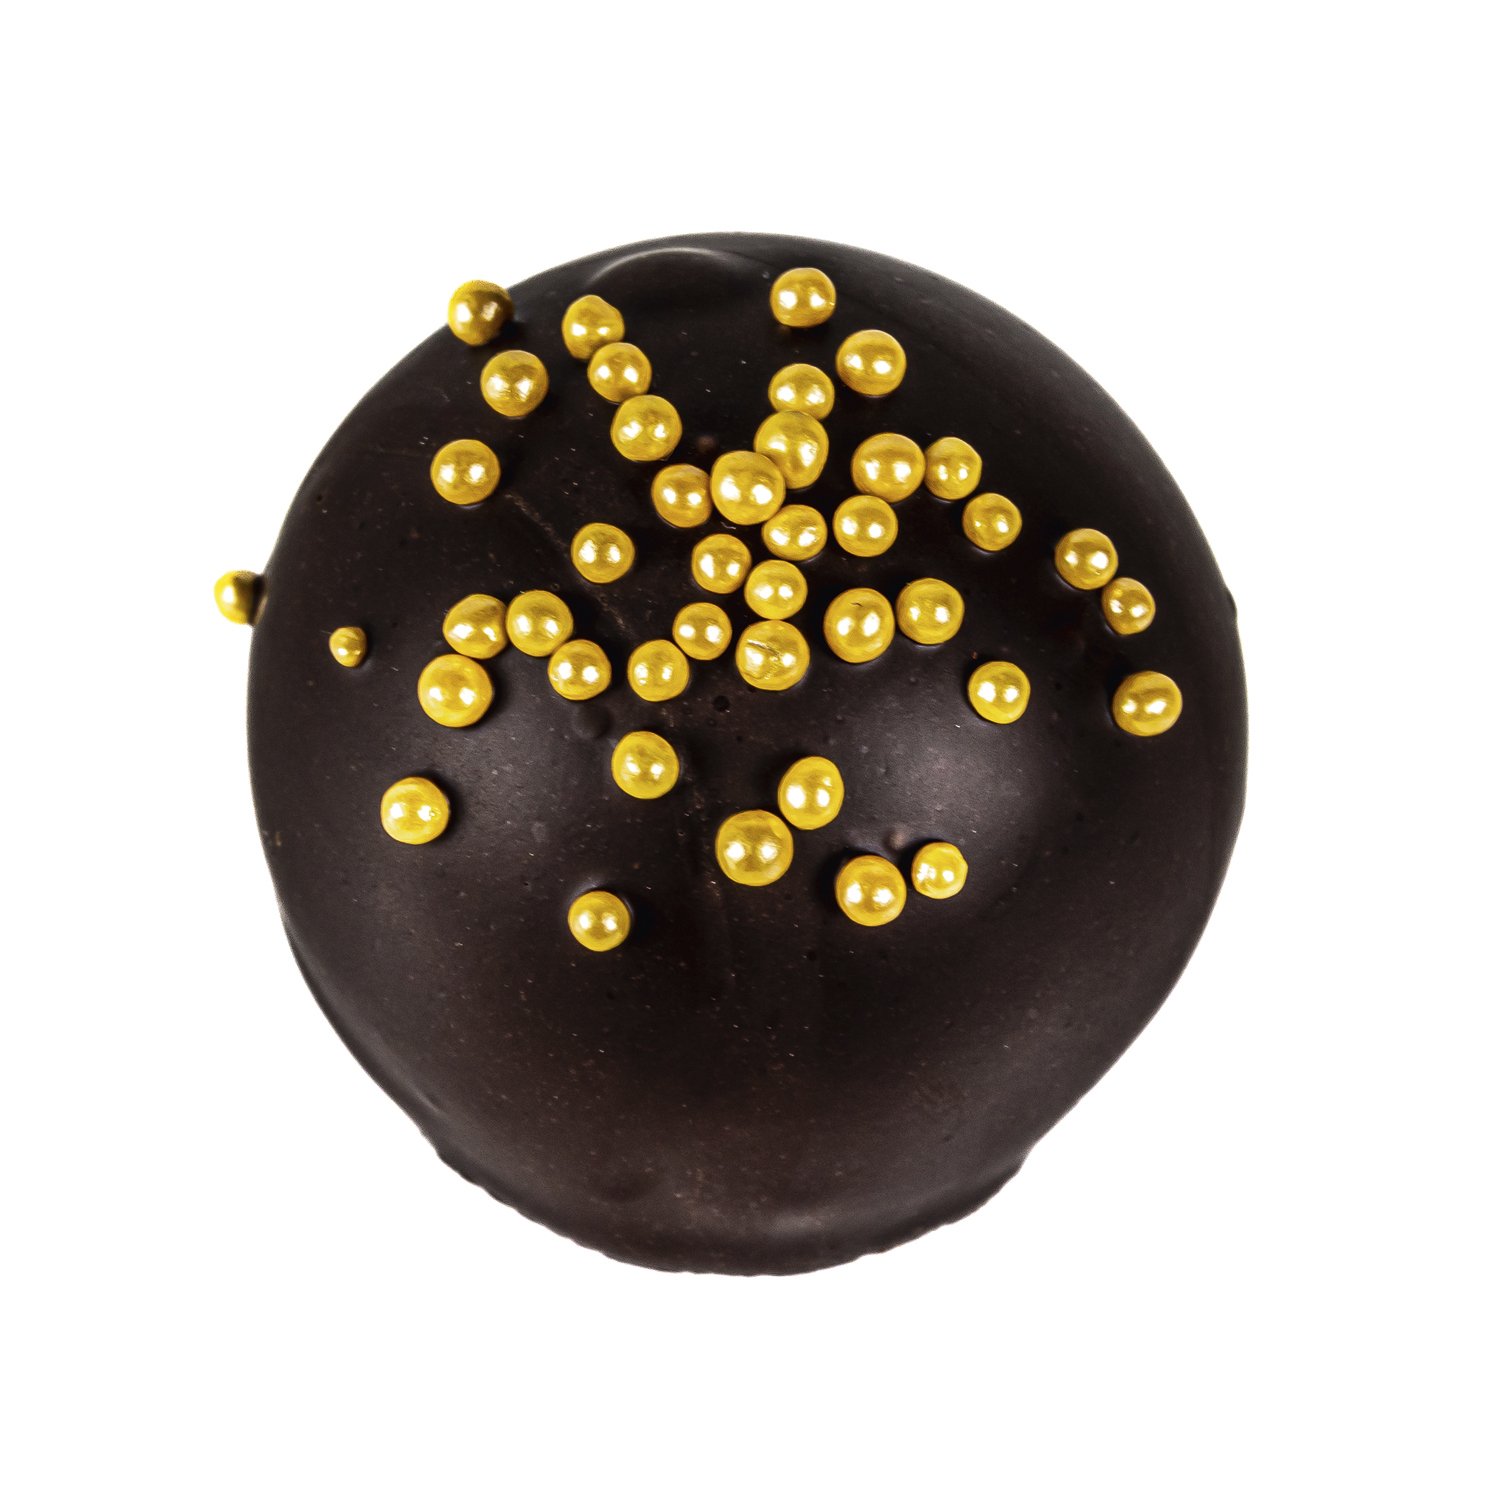 Cointreau truffle balls in dark chocolate 14g - 1.26xkg